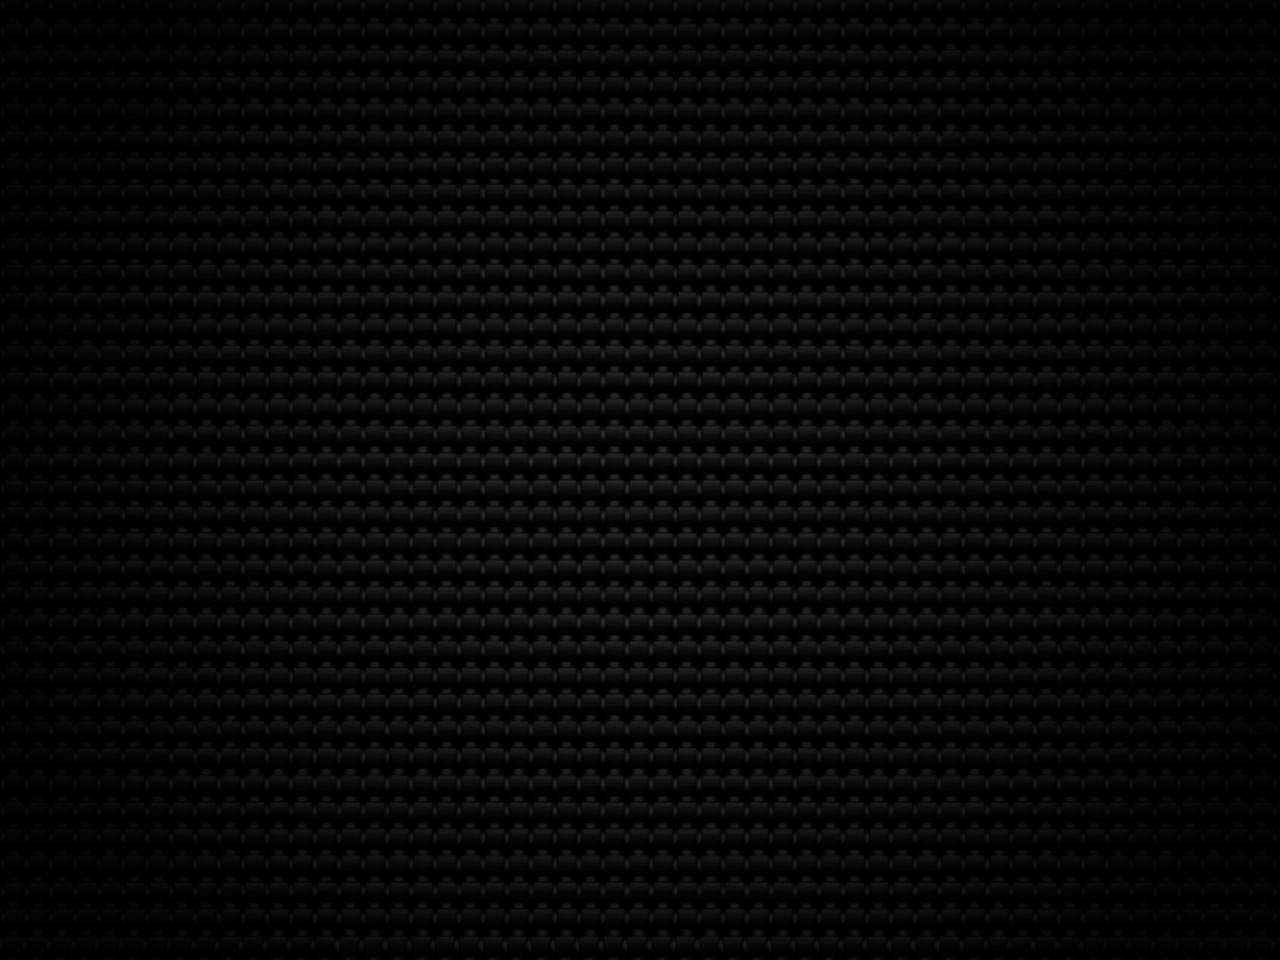 Download wallpaper 1280x960 texture, black, background standard 4:3 hd  background